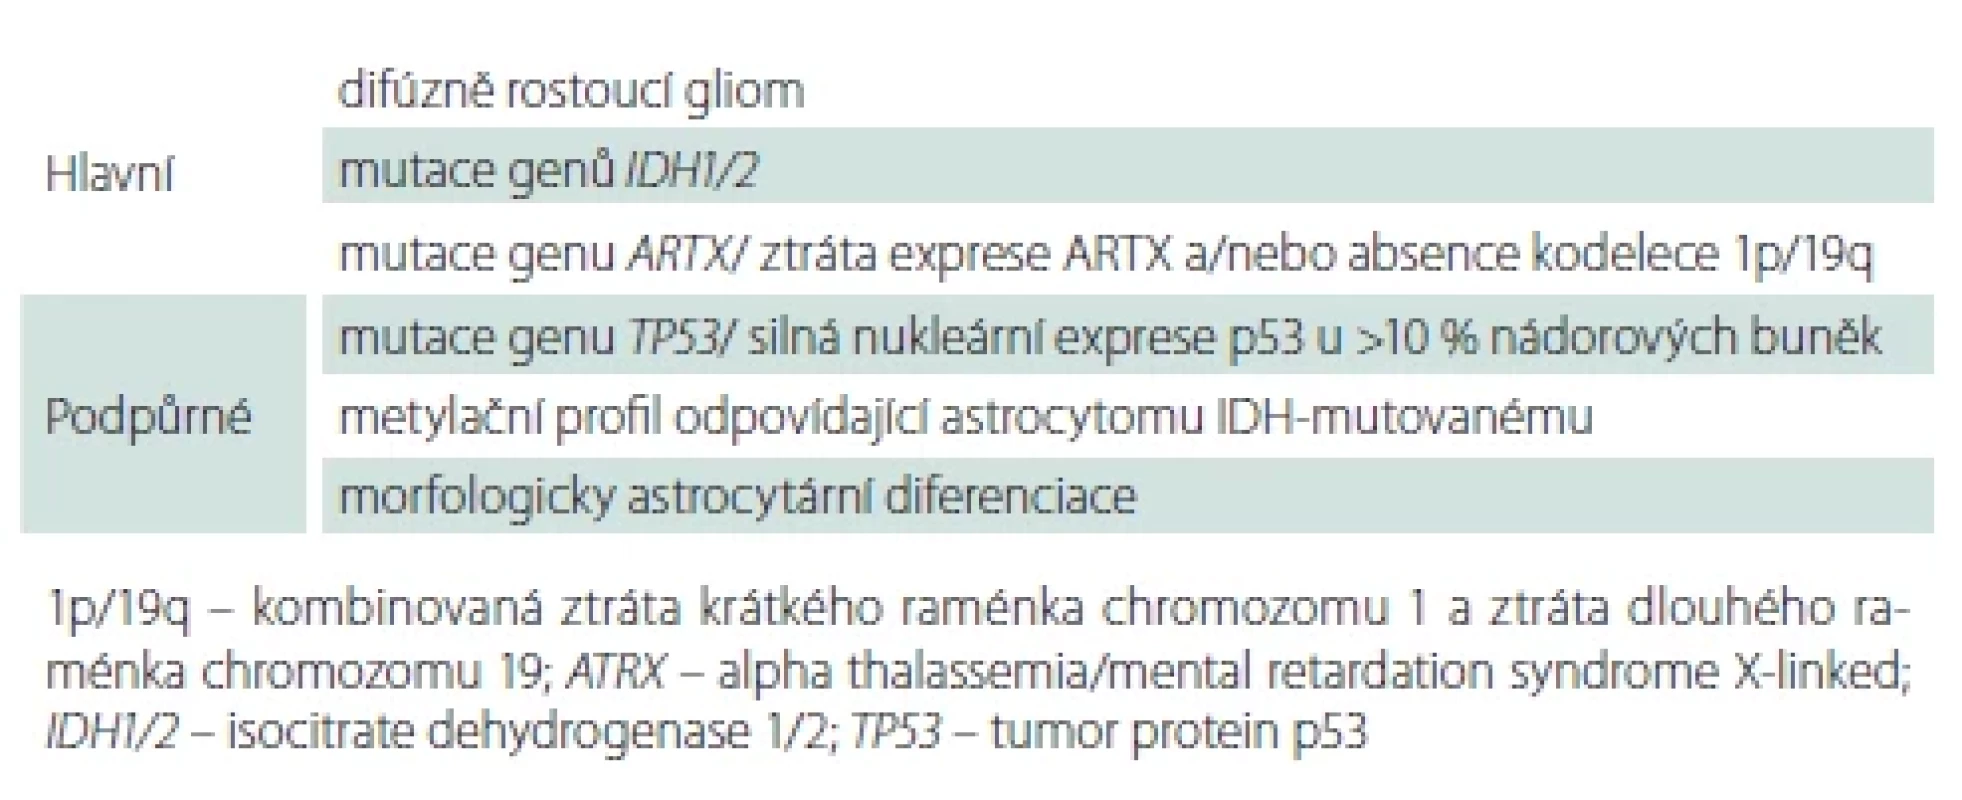 Diagnostická kritéria pro astrocytom IDH-mutovaný dle WHO.